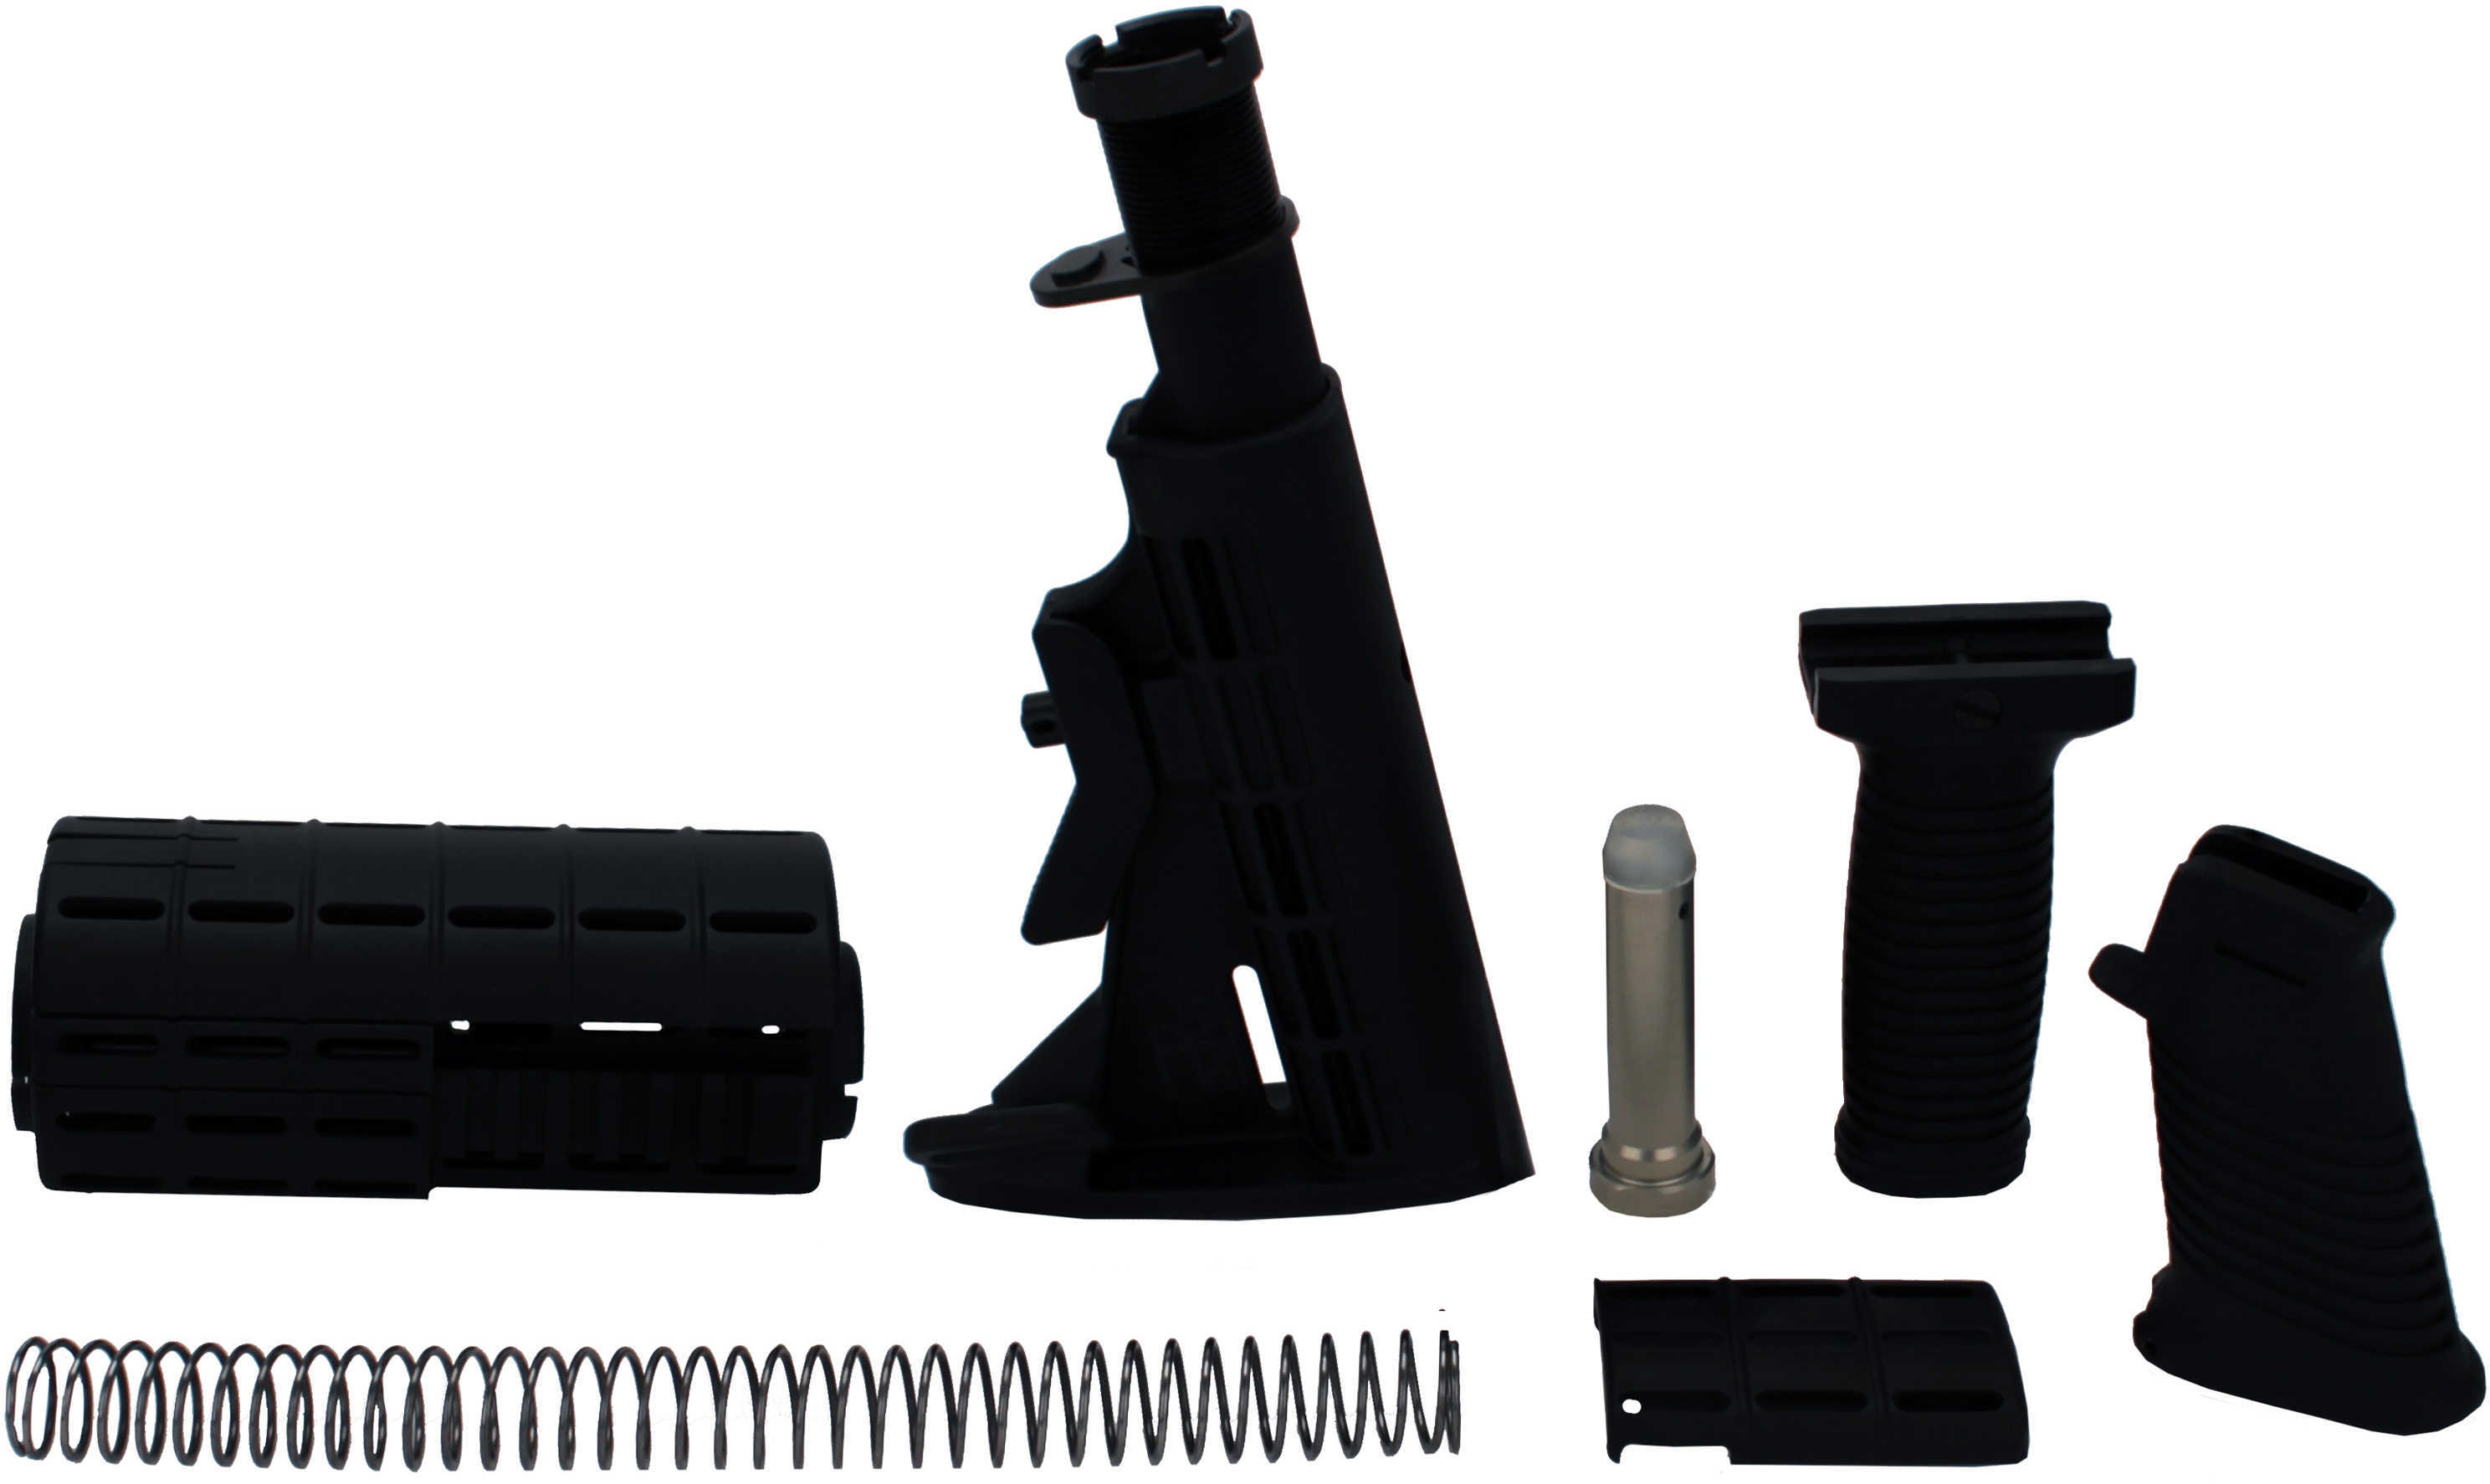 Tapco ZSTK09161 Intrafuse AR-15 Composite Black